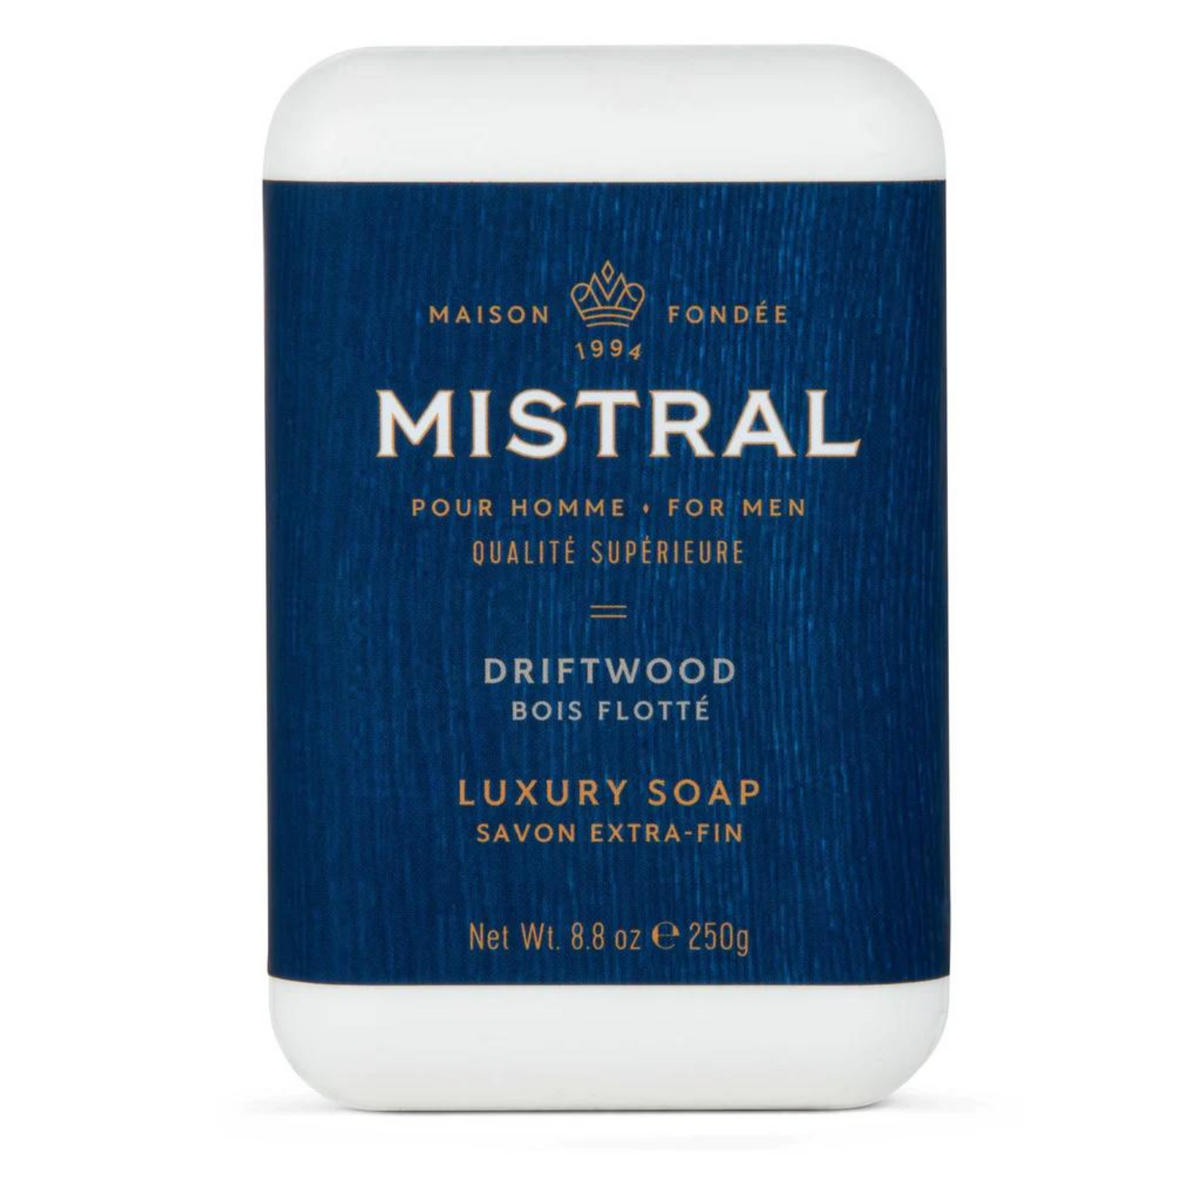 Primary Image of Mistral Driftwood Bar Soap (8.8 oz)